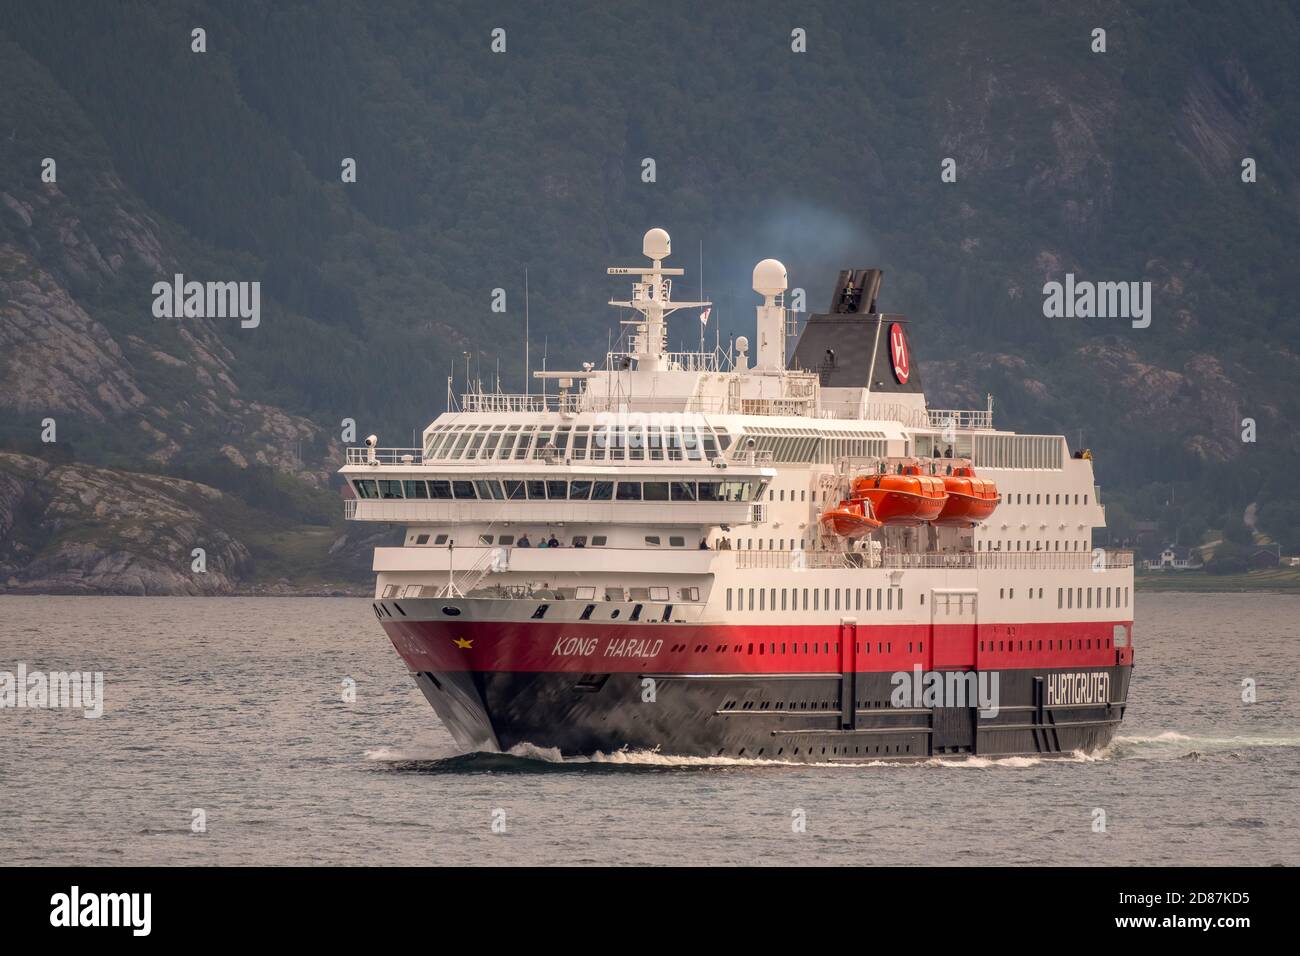 Ship MS Kong Harald, Bolga, Nordland, Norway, Scandinavia, Europe, adventure travel, tourism, Hurtigruten, Hurtigruten voyage, cruise, cruise ship, re Stock Photo